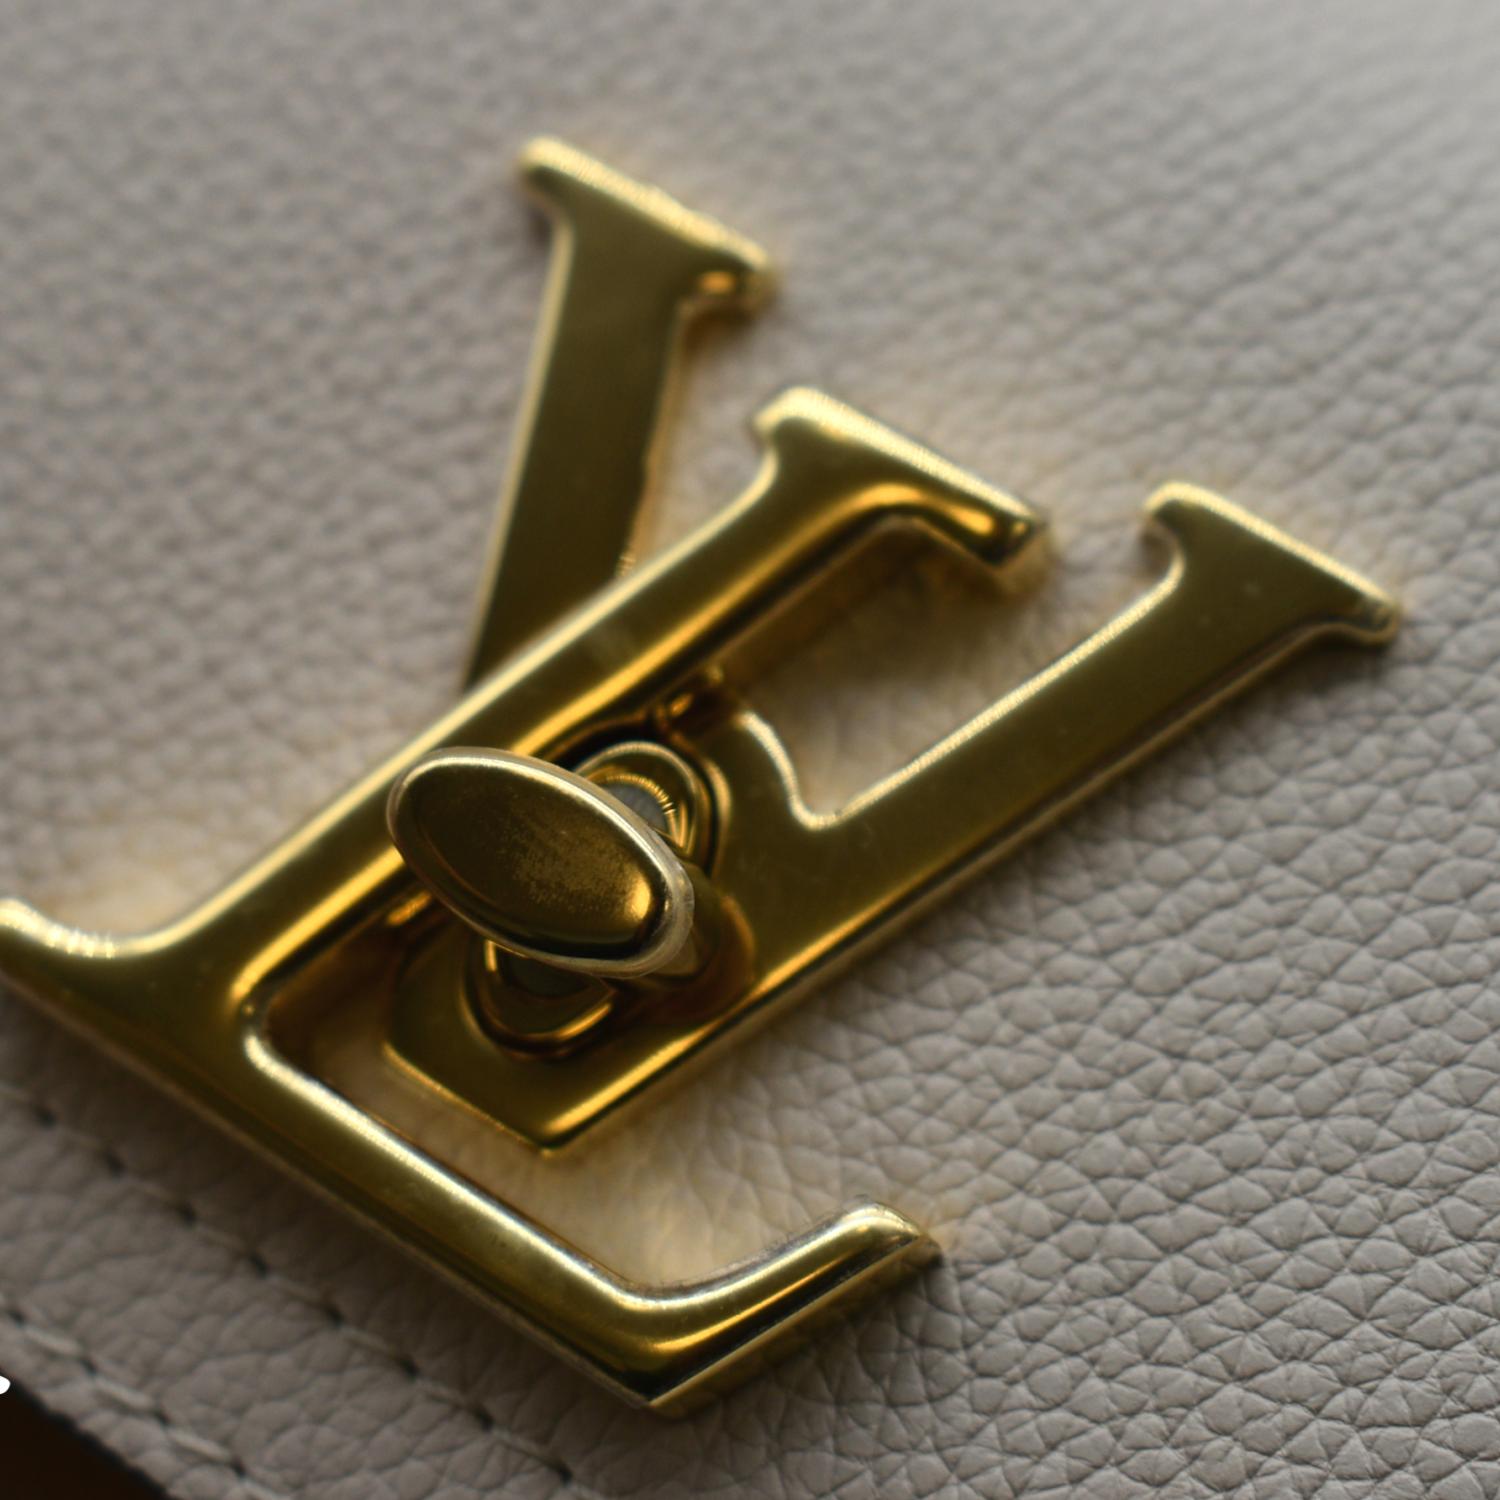 Louis Vuitton Pins